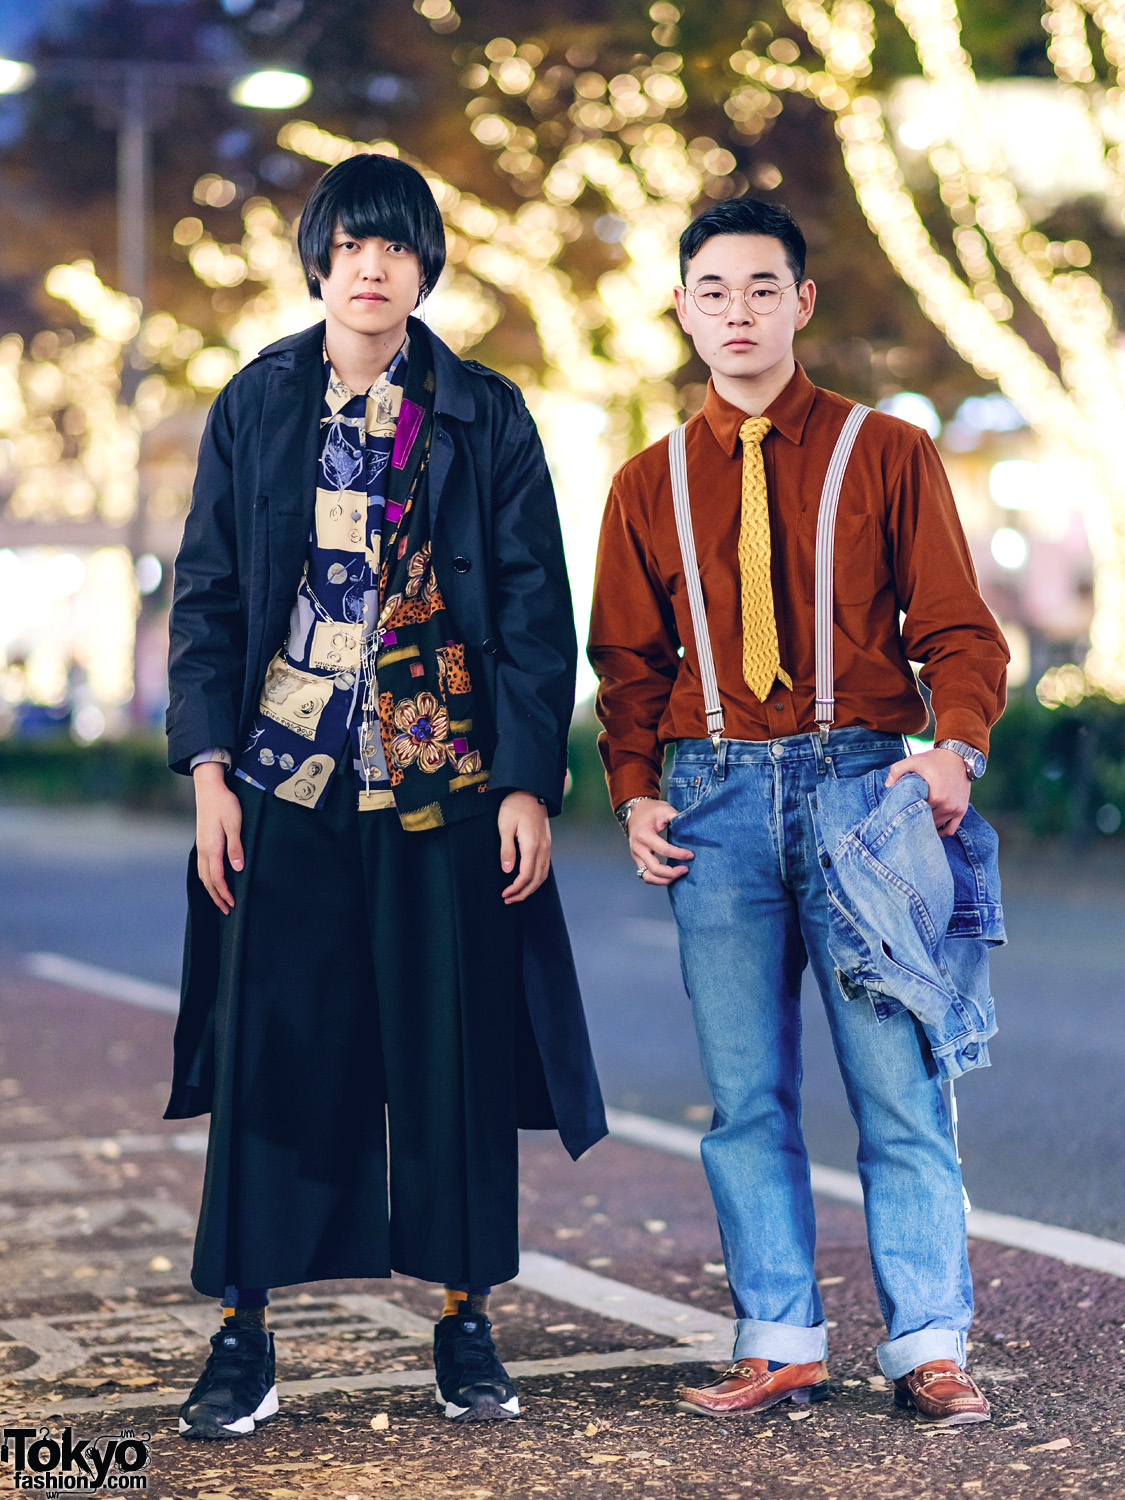 Tokyo Mens Layered Street Styles w/ Trench Coat, Wide Leg Pants, Denim Jacket, Suspenders, Leather Loafers & Reebok Insta Pump Sneakers